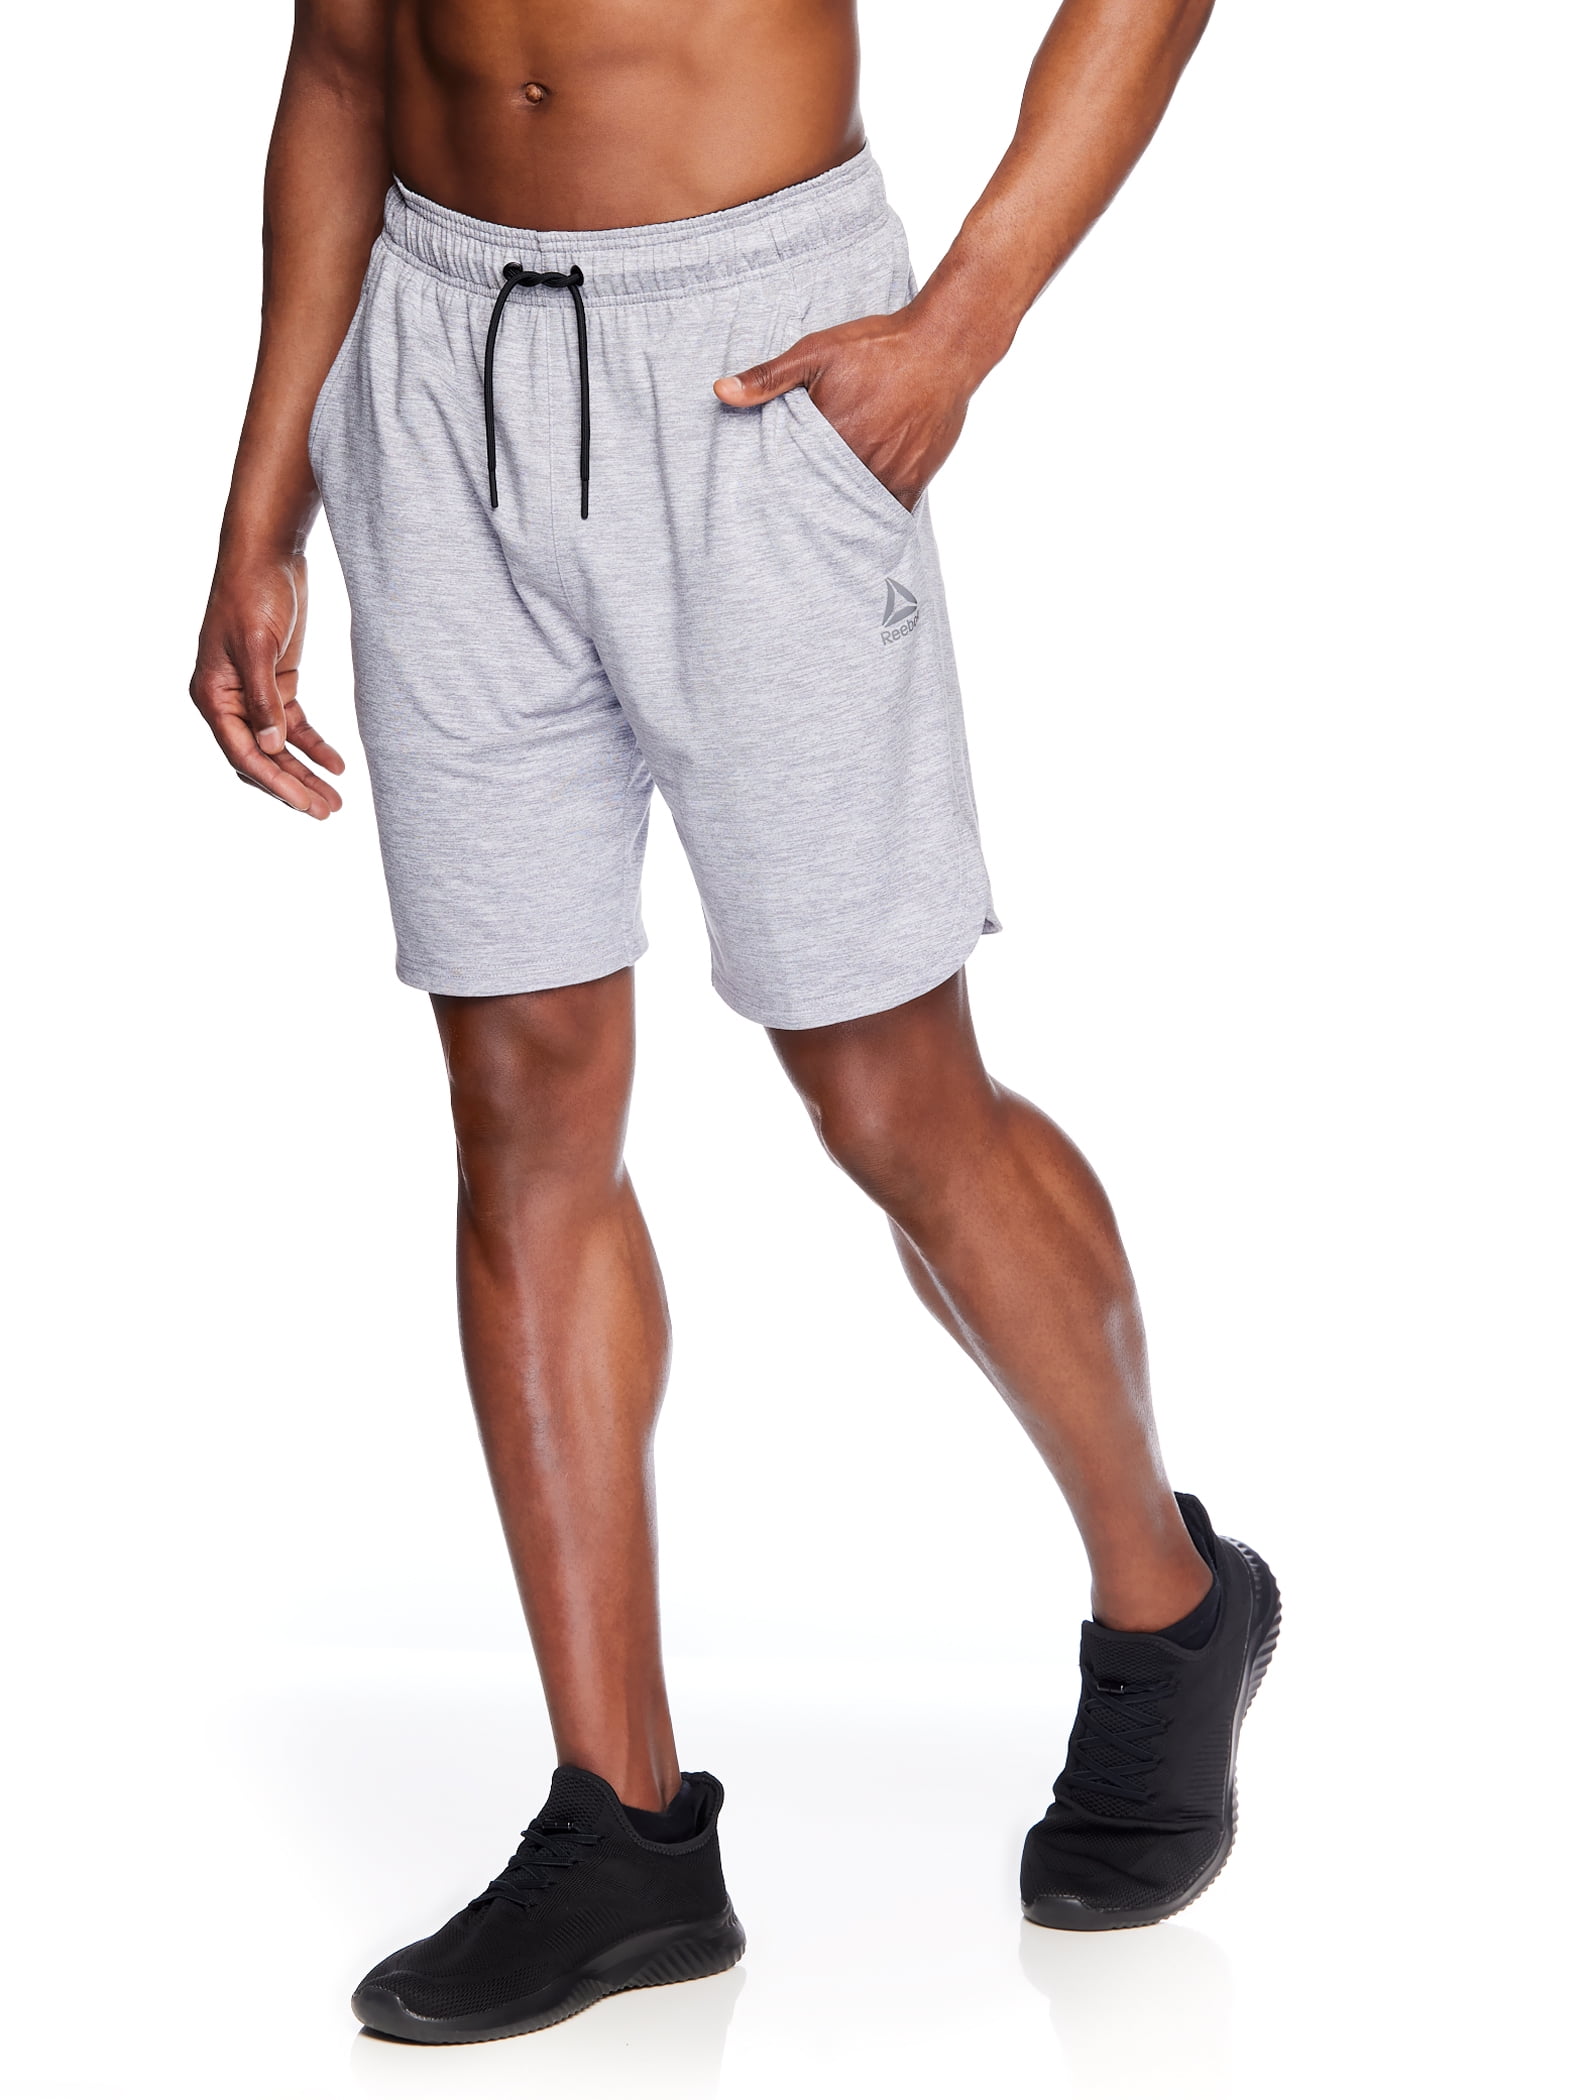 Reebok Men's Performance Knit Shorts, 9" Inseam, up to Size 3XL Walmart.com